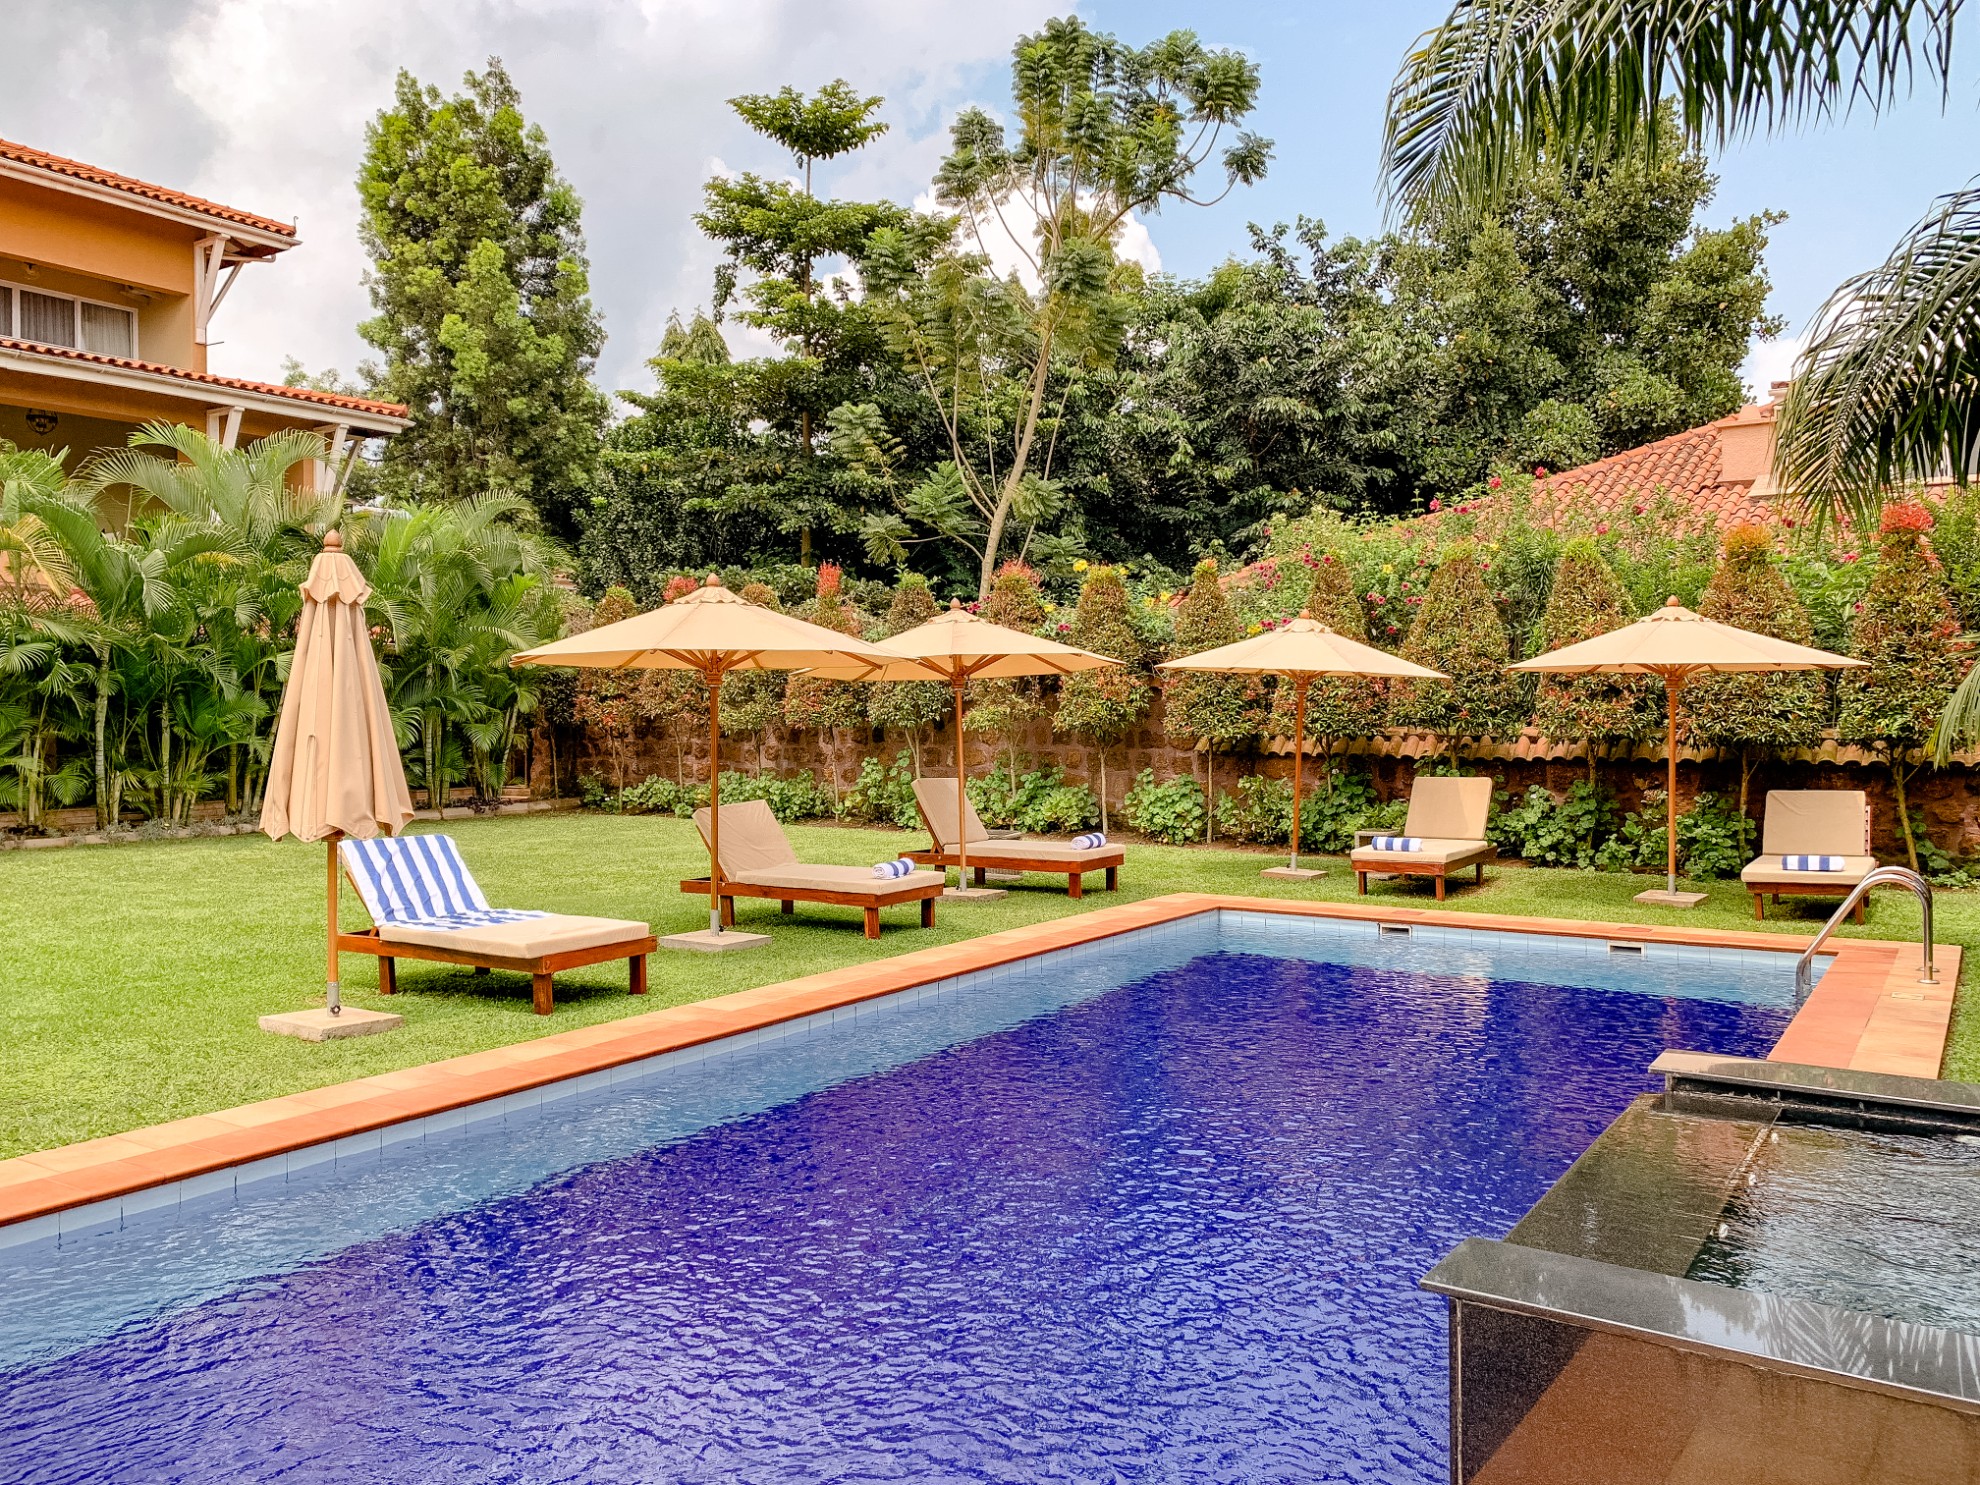 Uganda - 1568 - Entebbe - Hotel No.5 Uganda Pool and Gardens